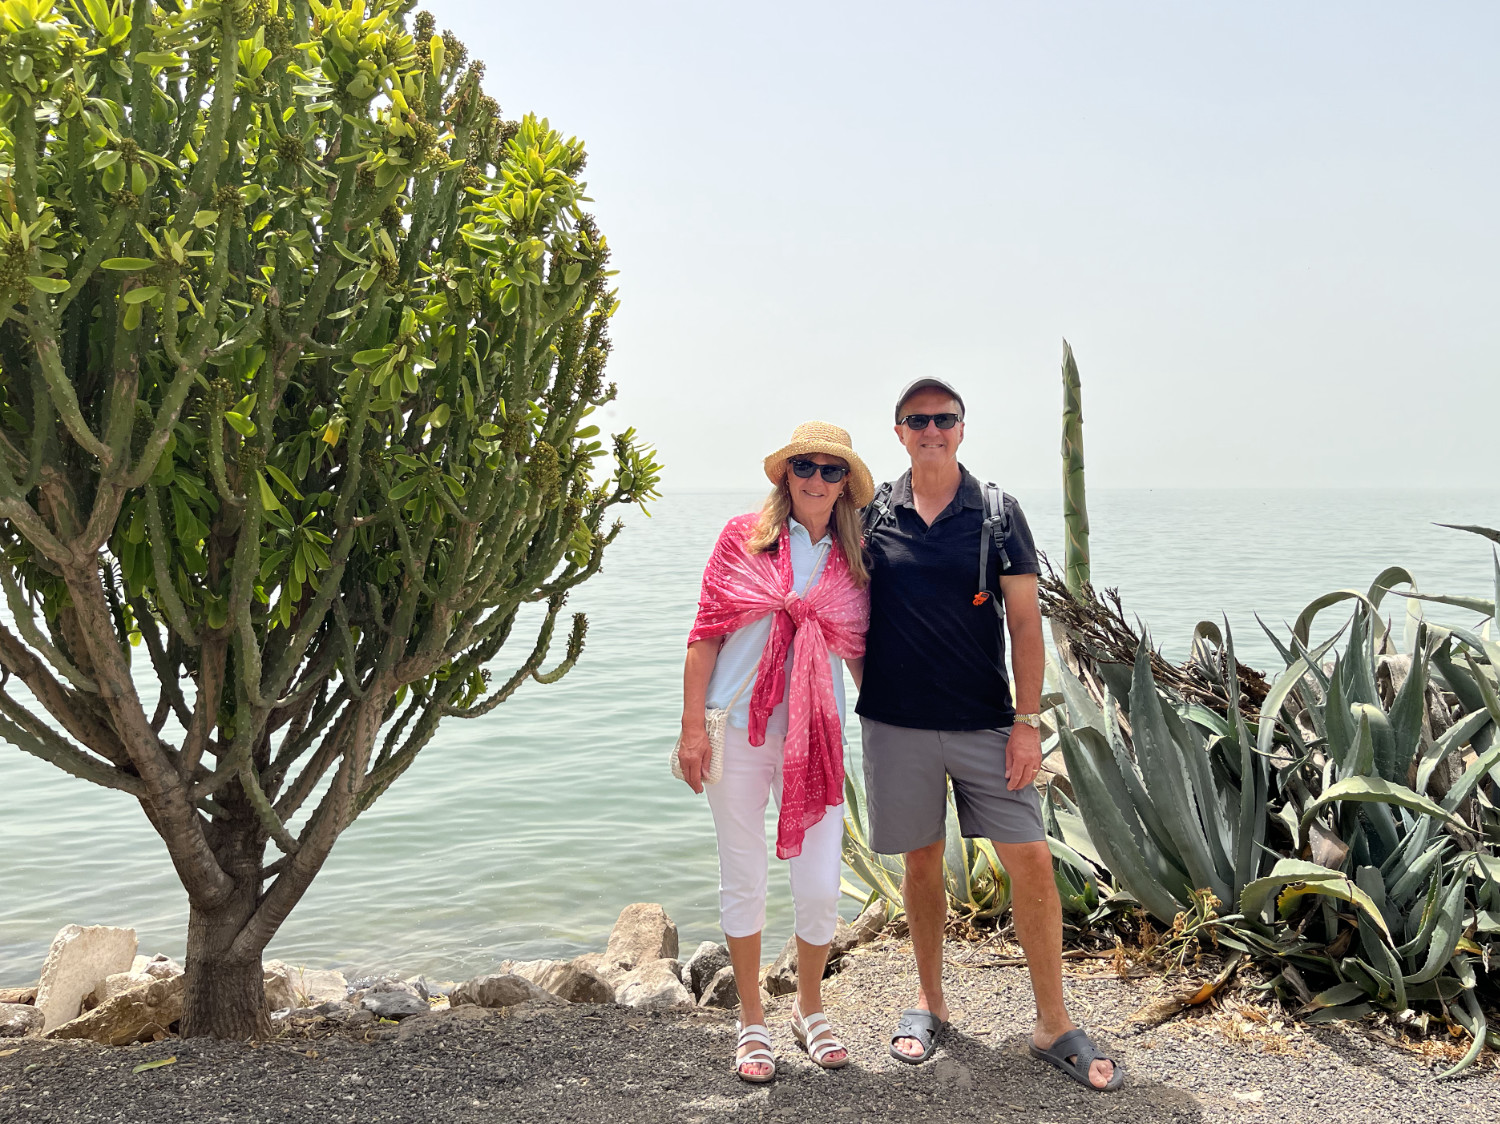 M&K at Sea of Galilee